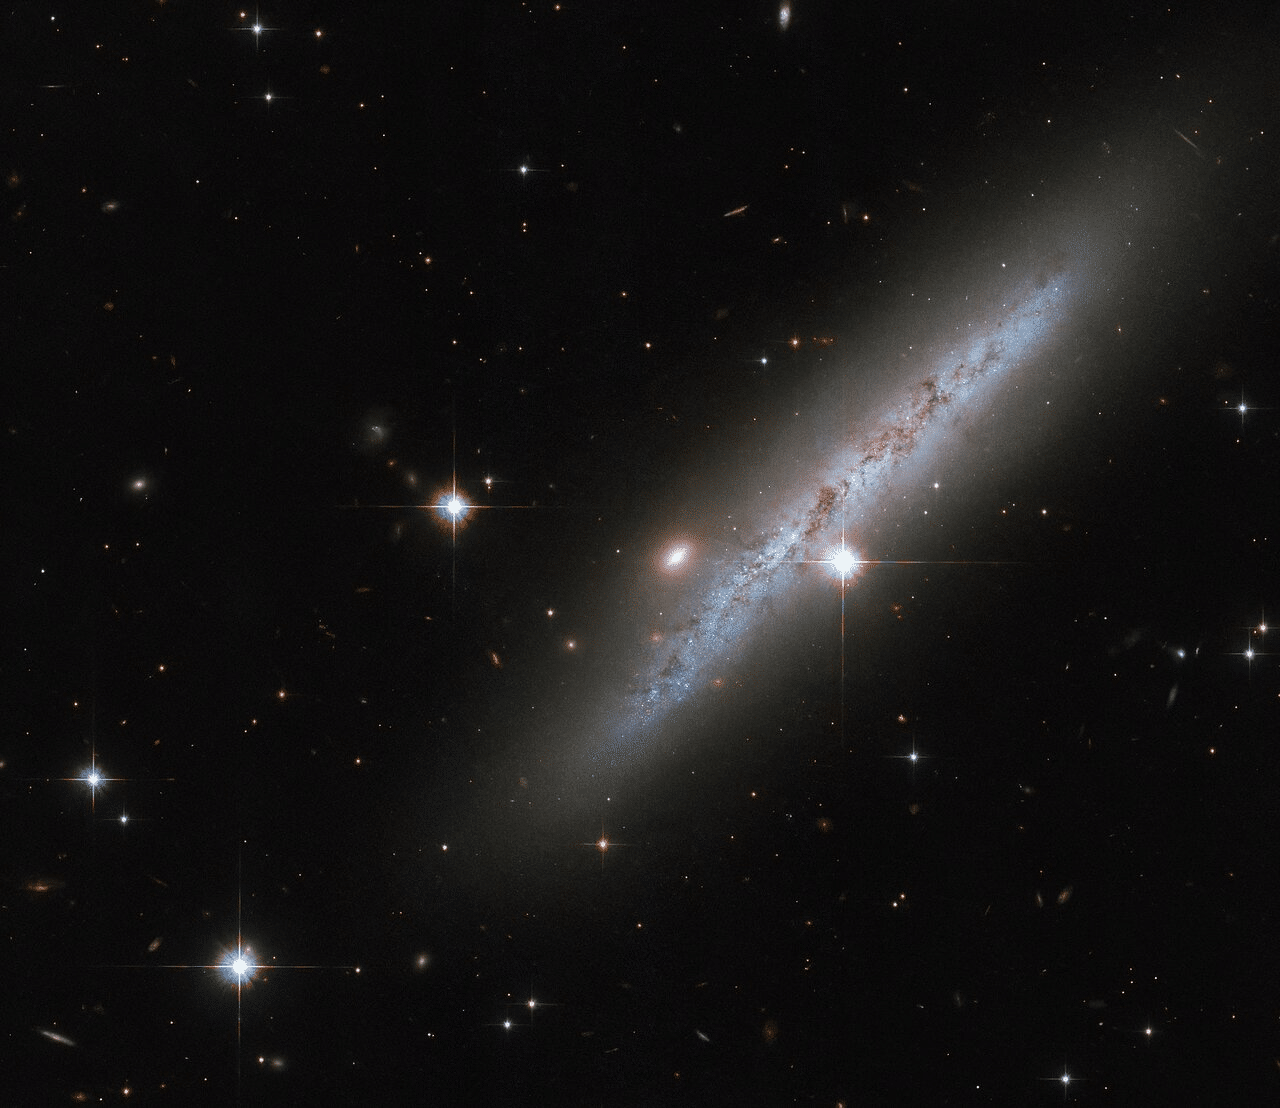 ©ESA/Hubble & NASA, C. Kilpatrick